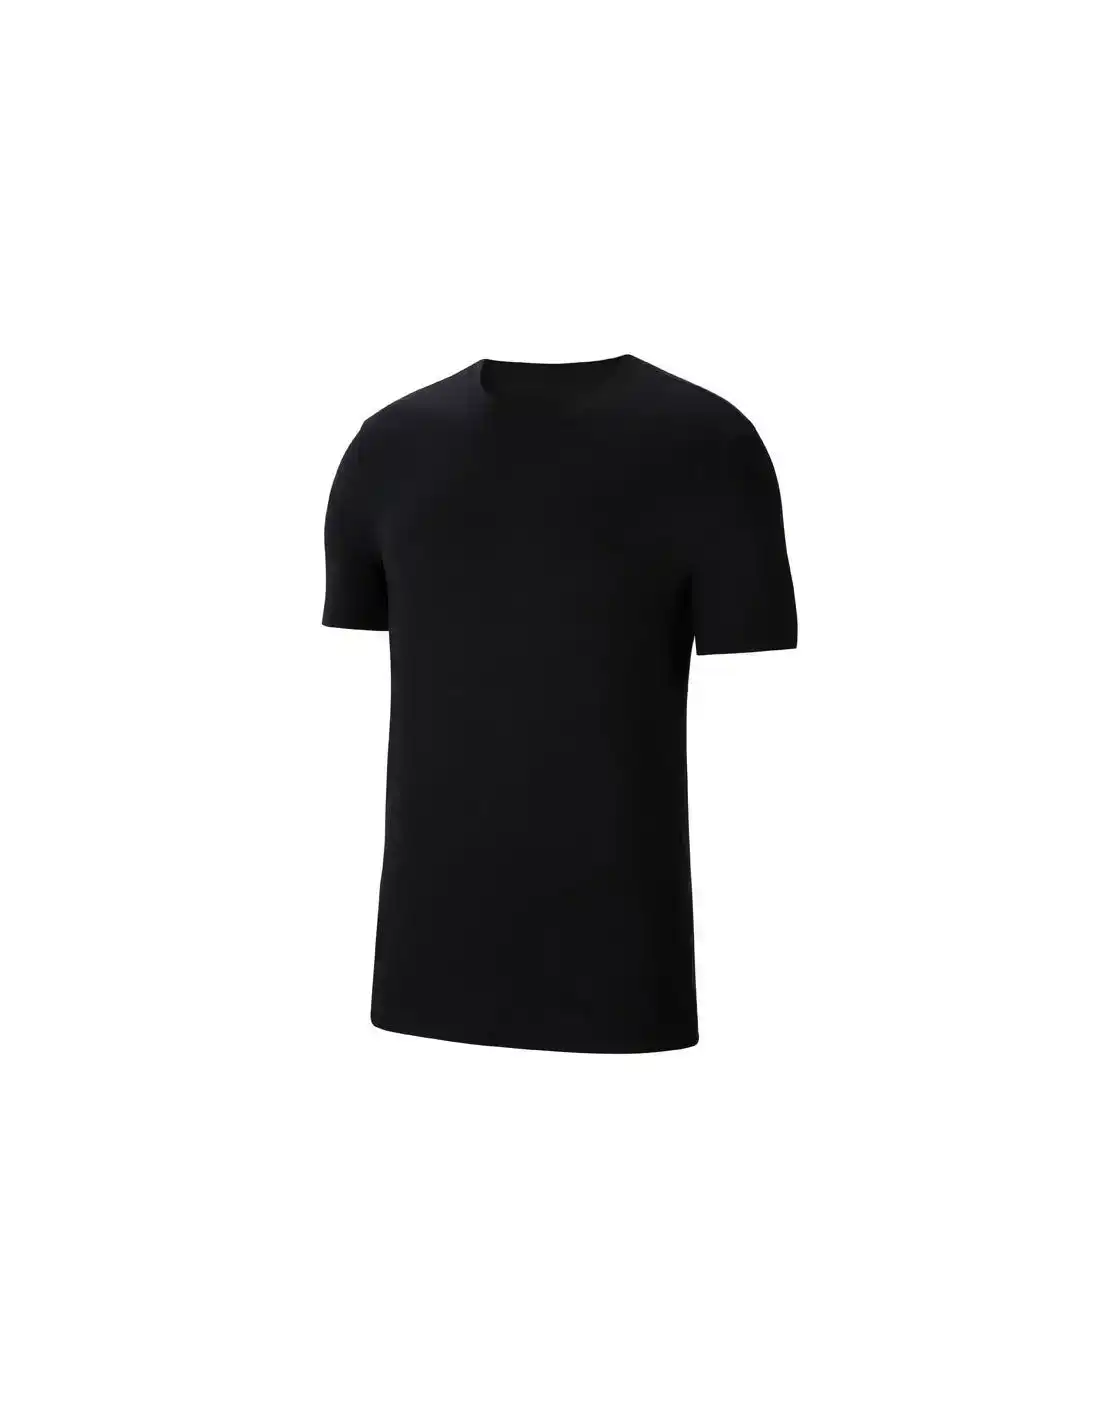 5 x Nike Park 20 T-Shirt Training Athletic Sportswear Black